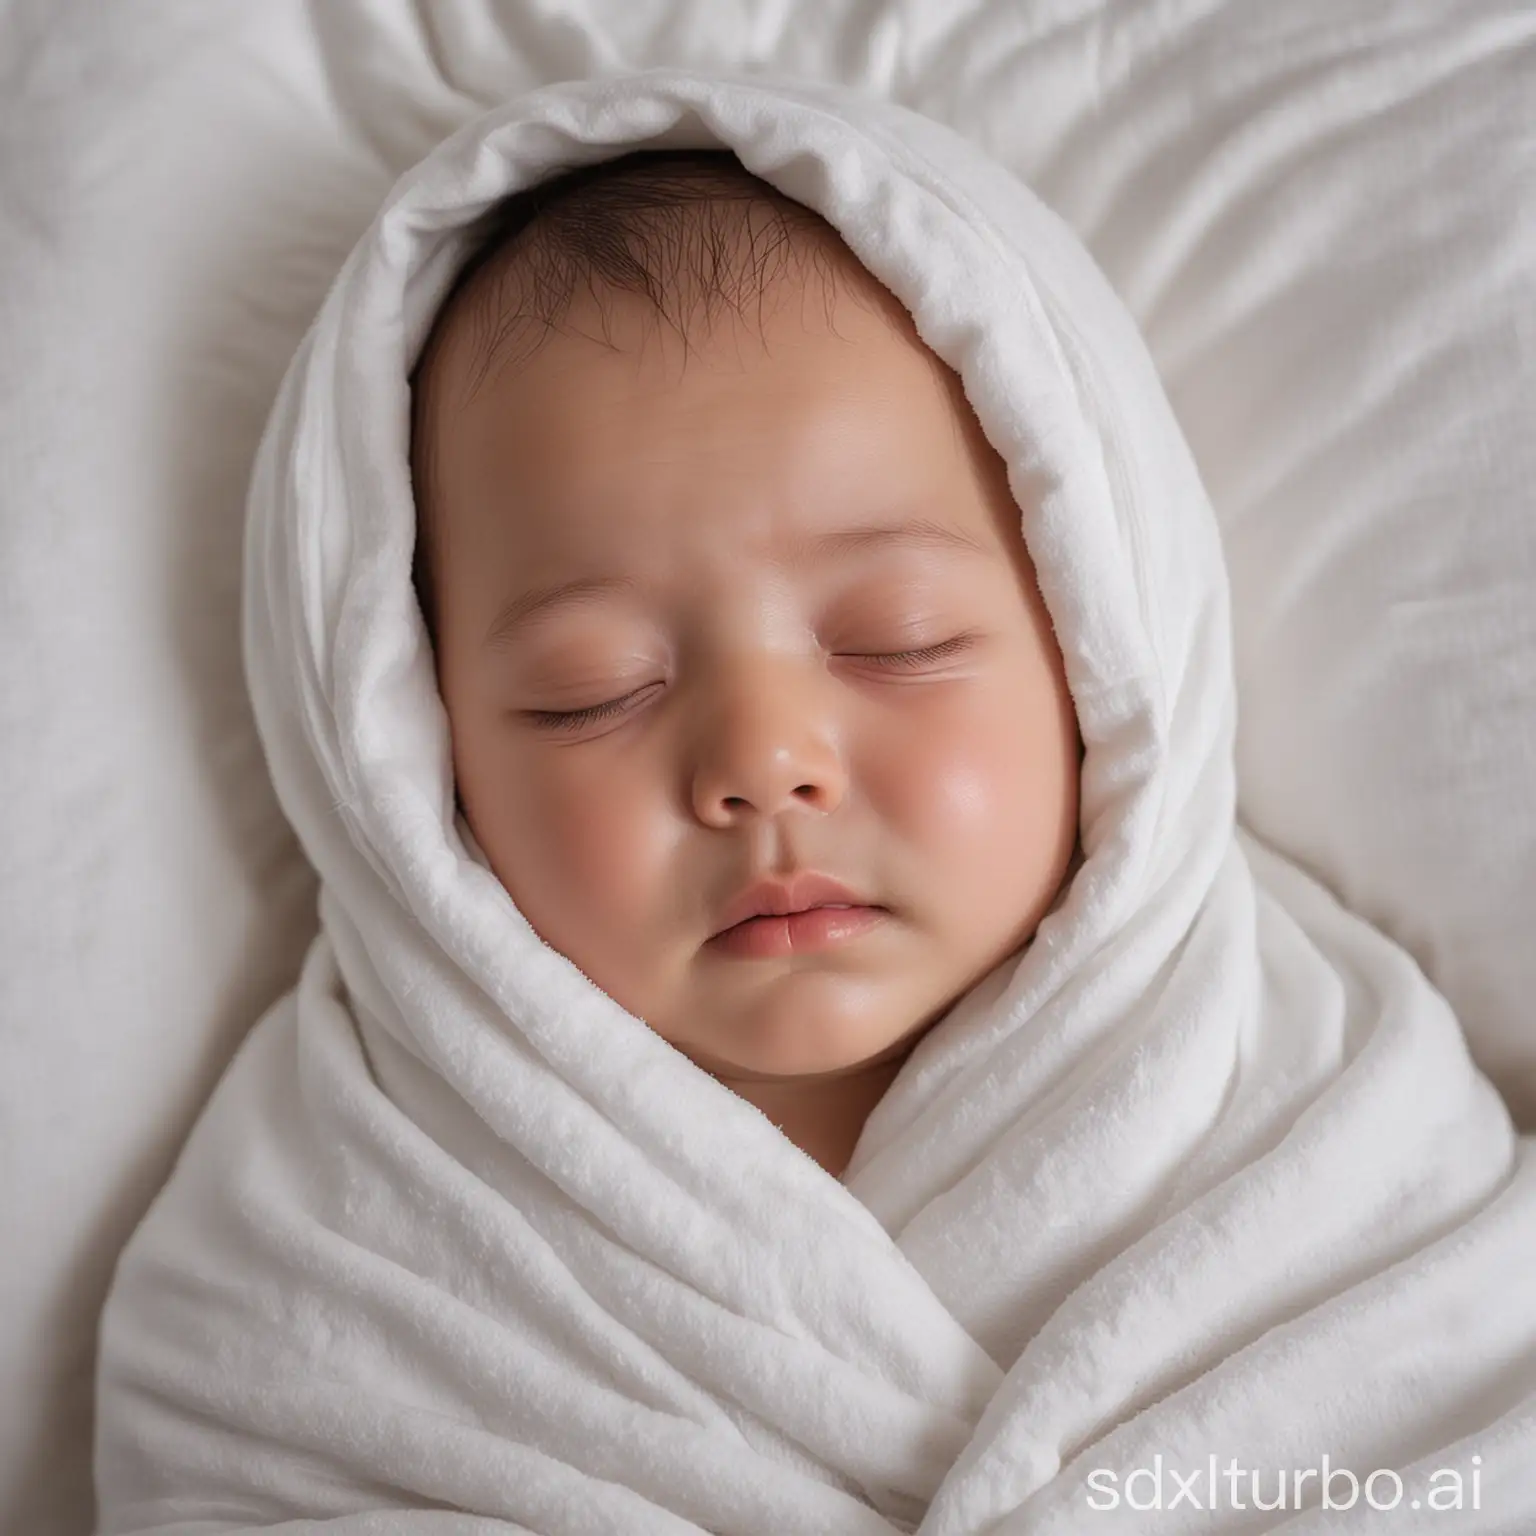 Infant-Boy-Sleeping-Peacefully-in-White-Blanket